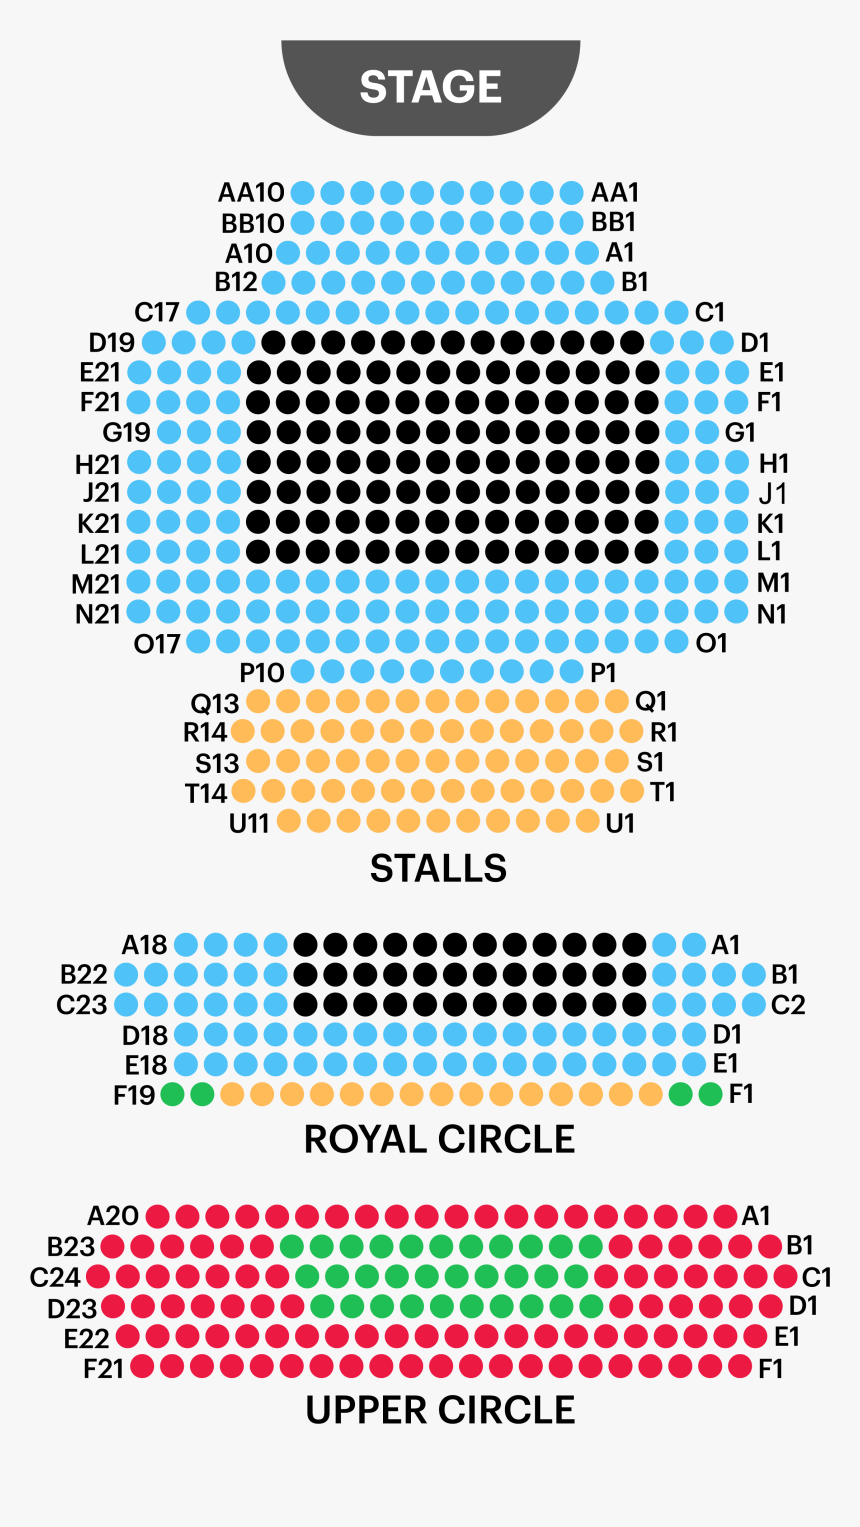 Duke Of York"s Theatre Seating Plan - Noel Coward Theatre Seating Plan, HD Png Download, Free Download